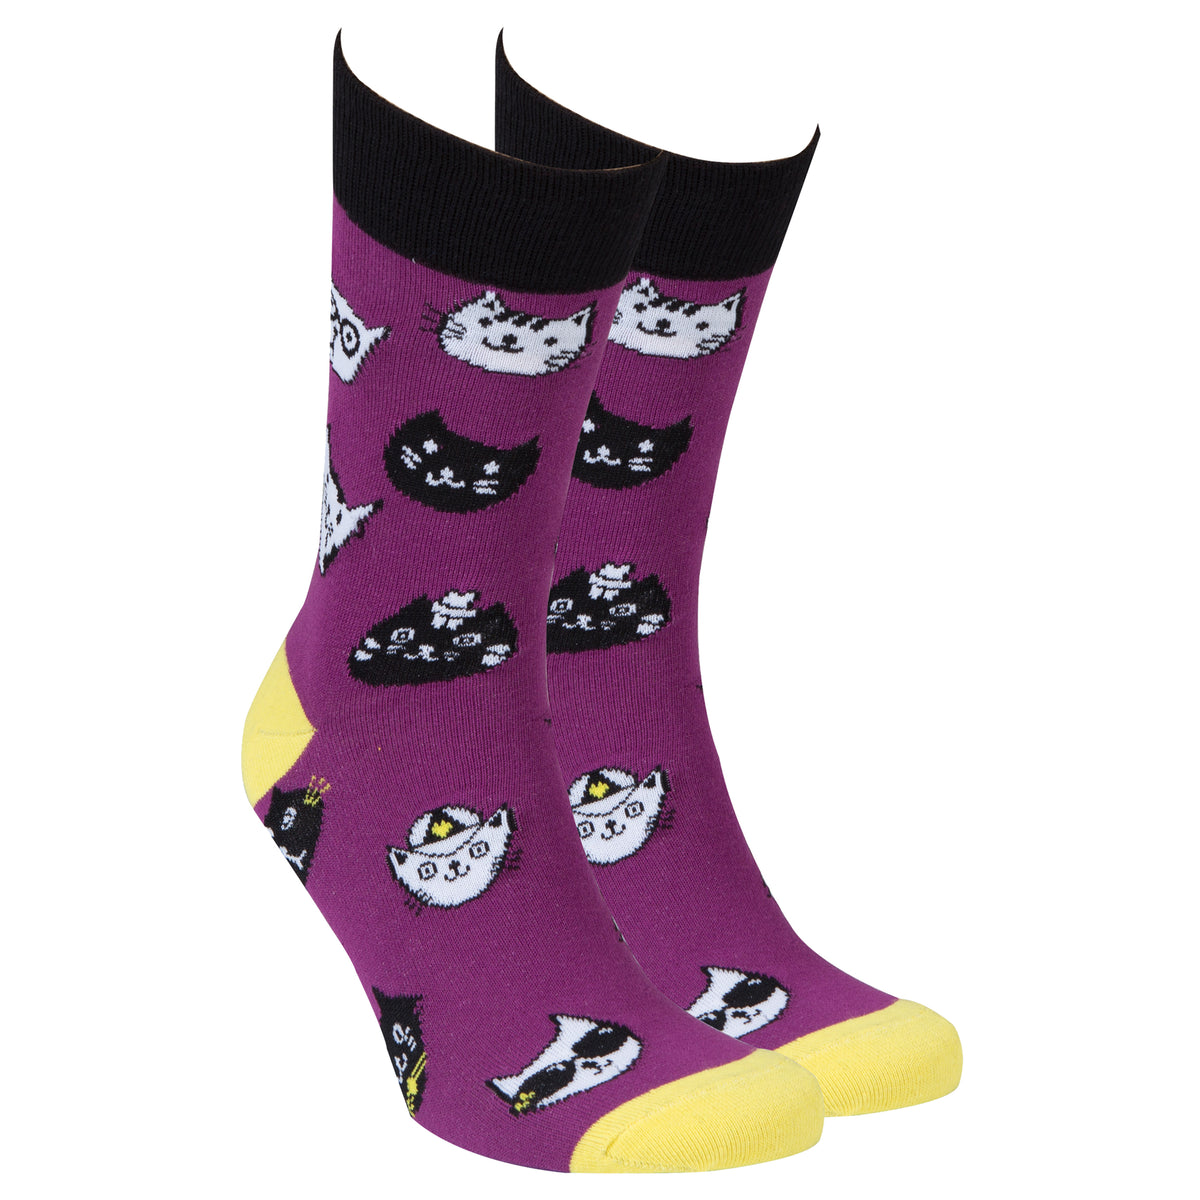 Men's Silly Cats Socks - Socks n Socks